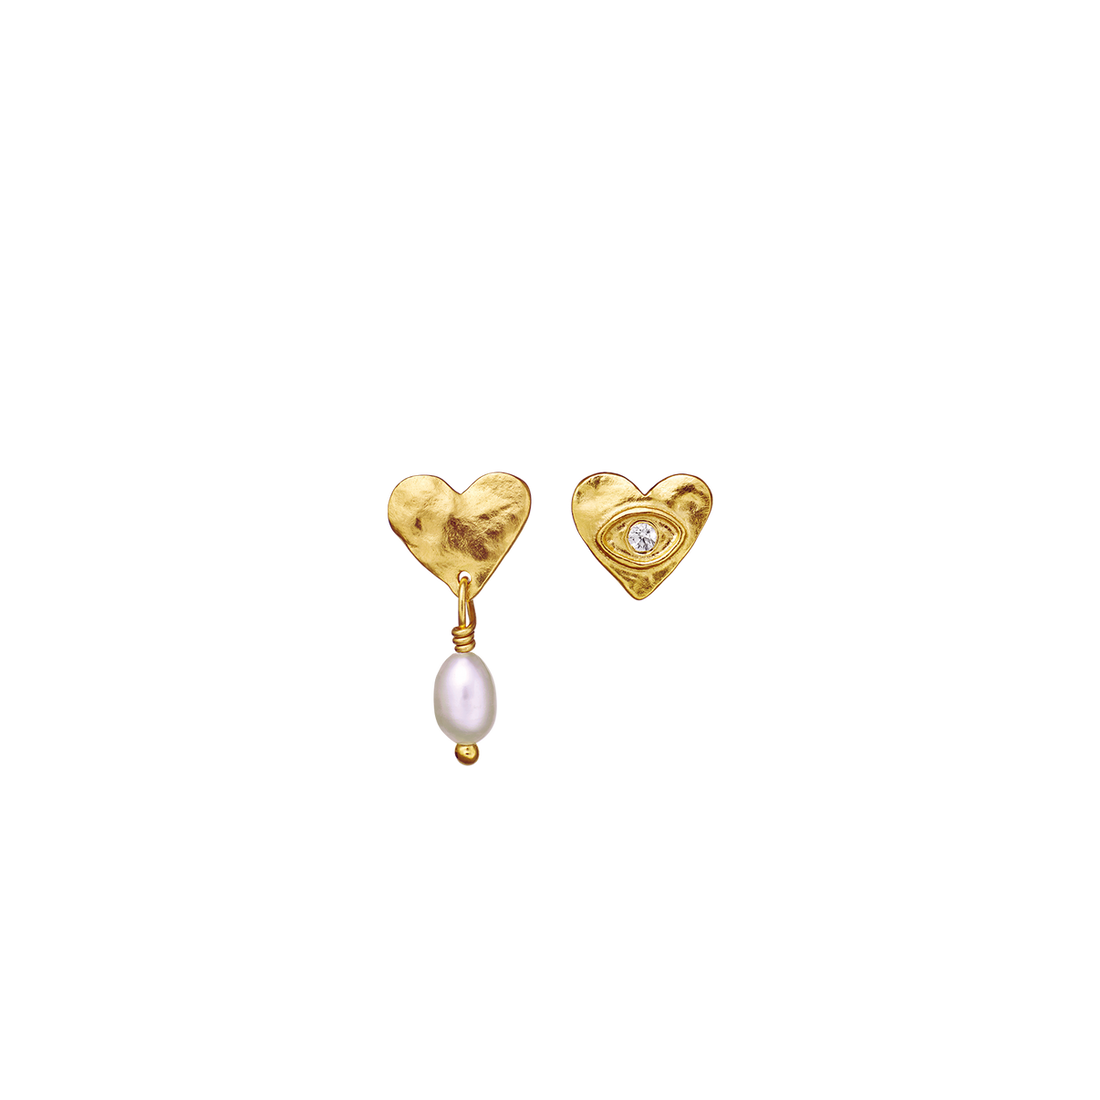 Vesta_earrings_gold_maanesten